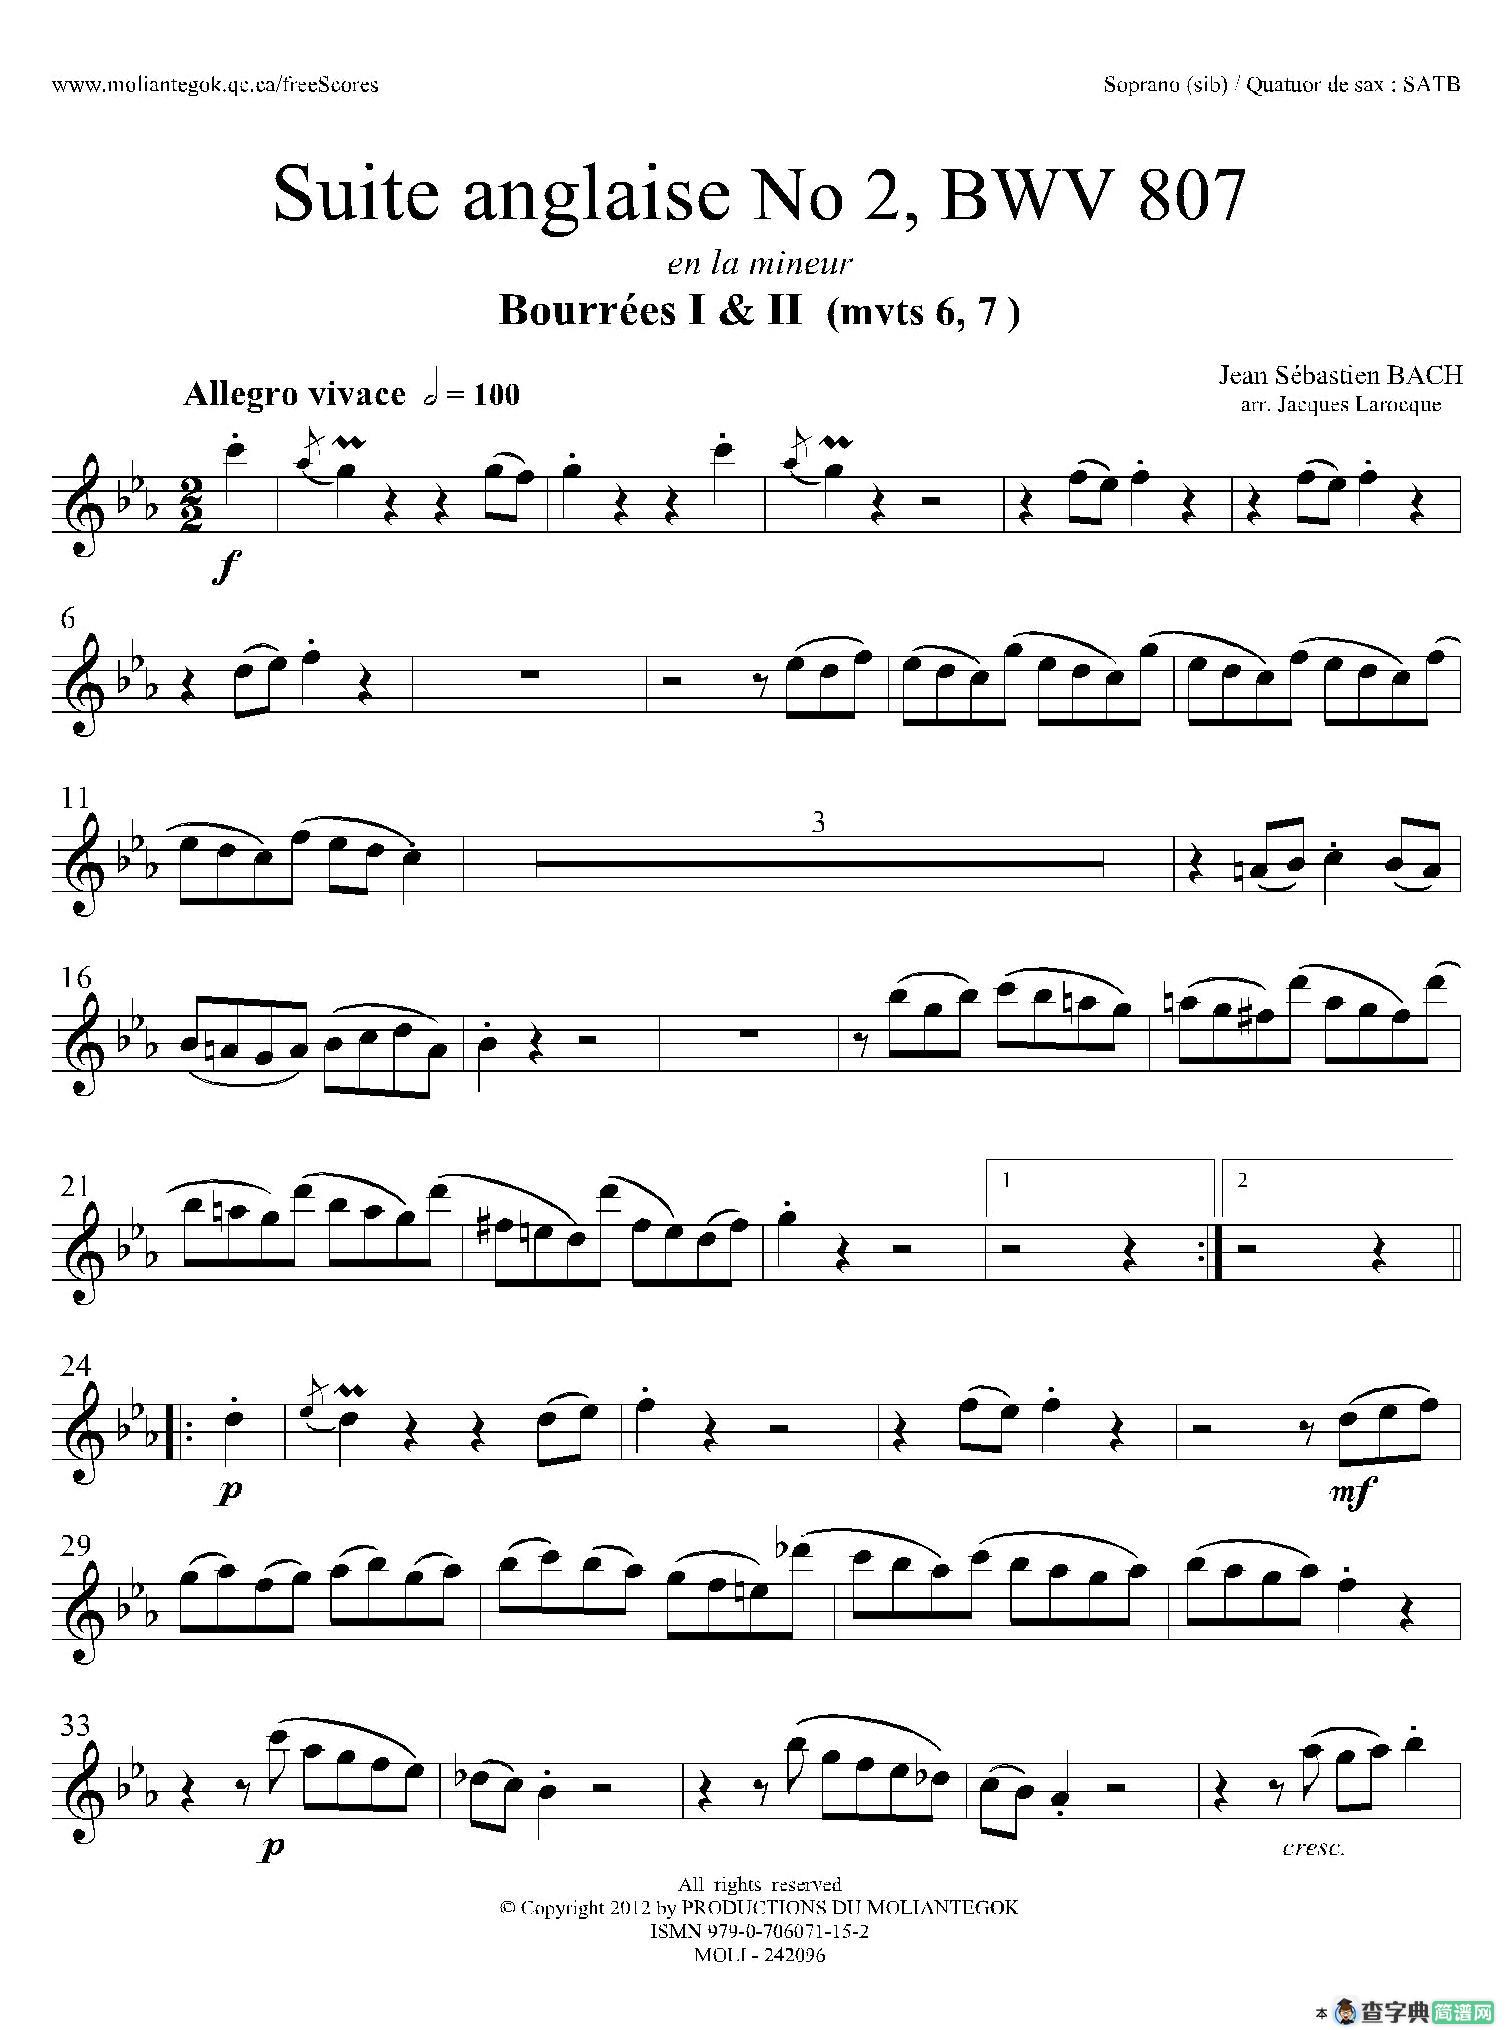 Suite anglaise No 2,BWV 807